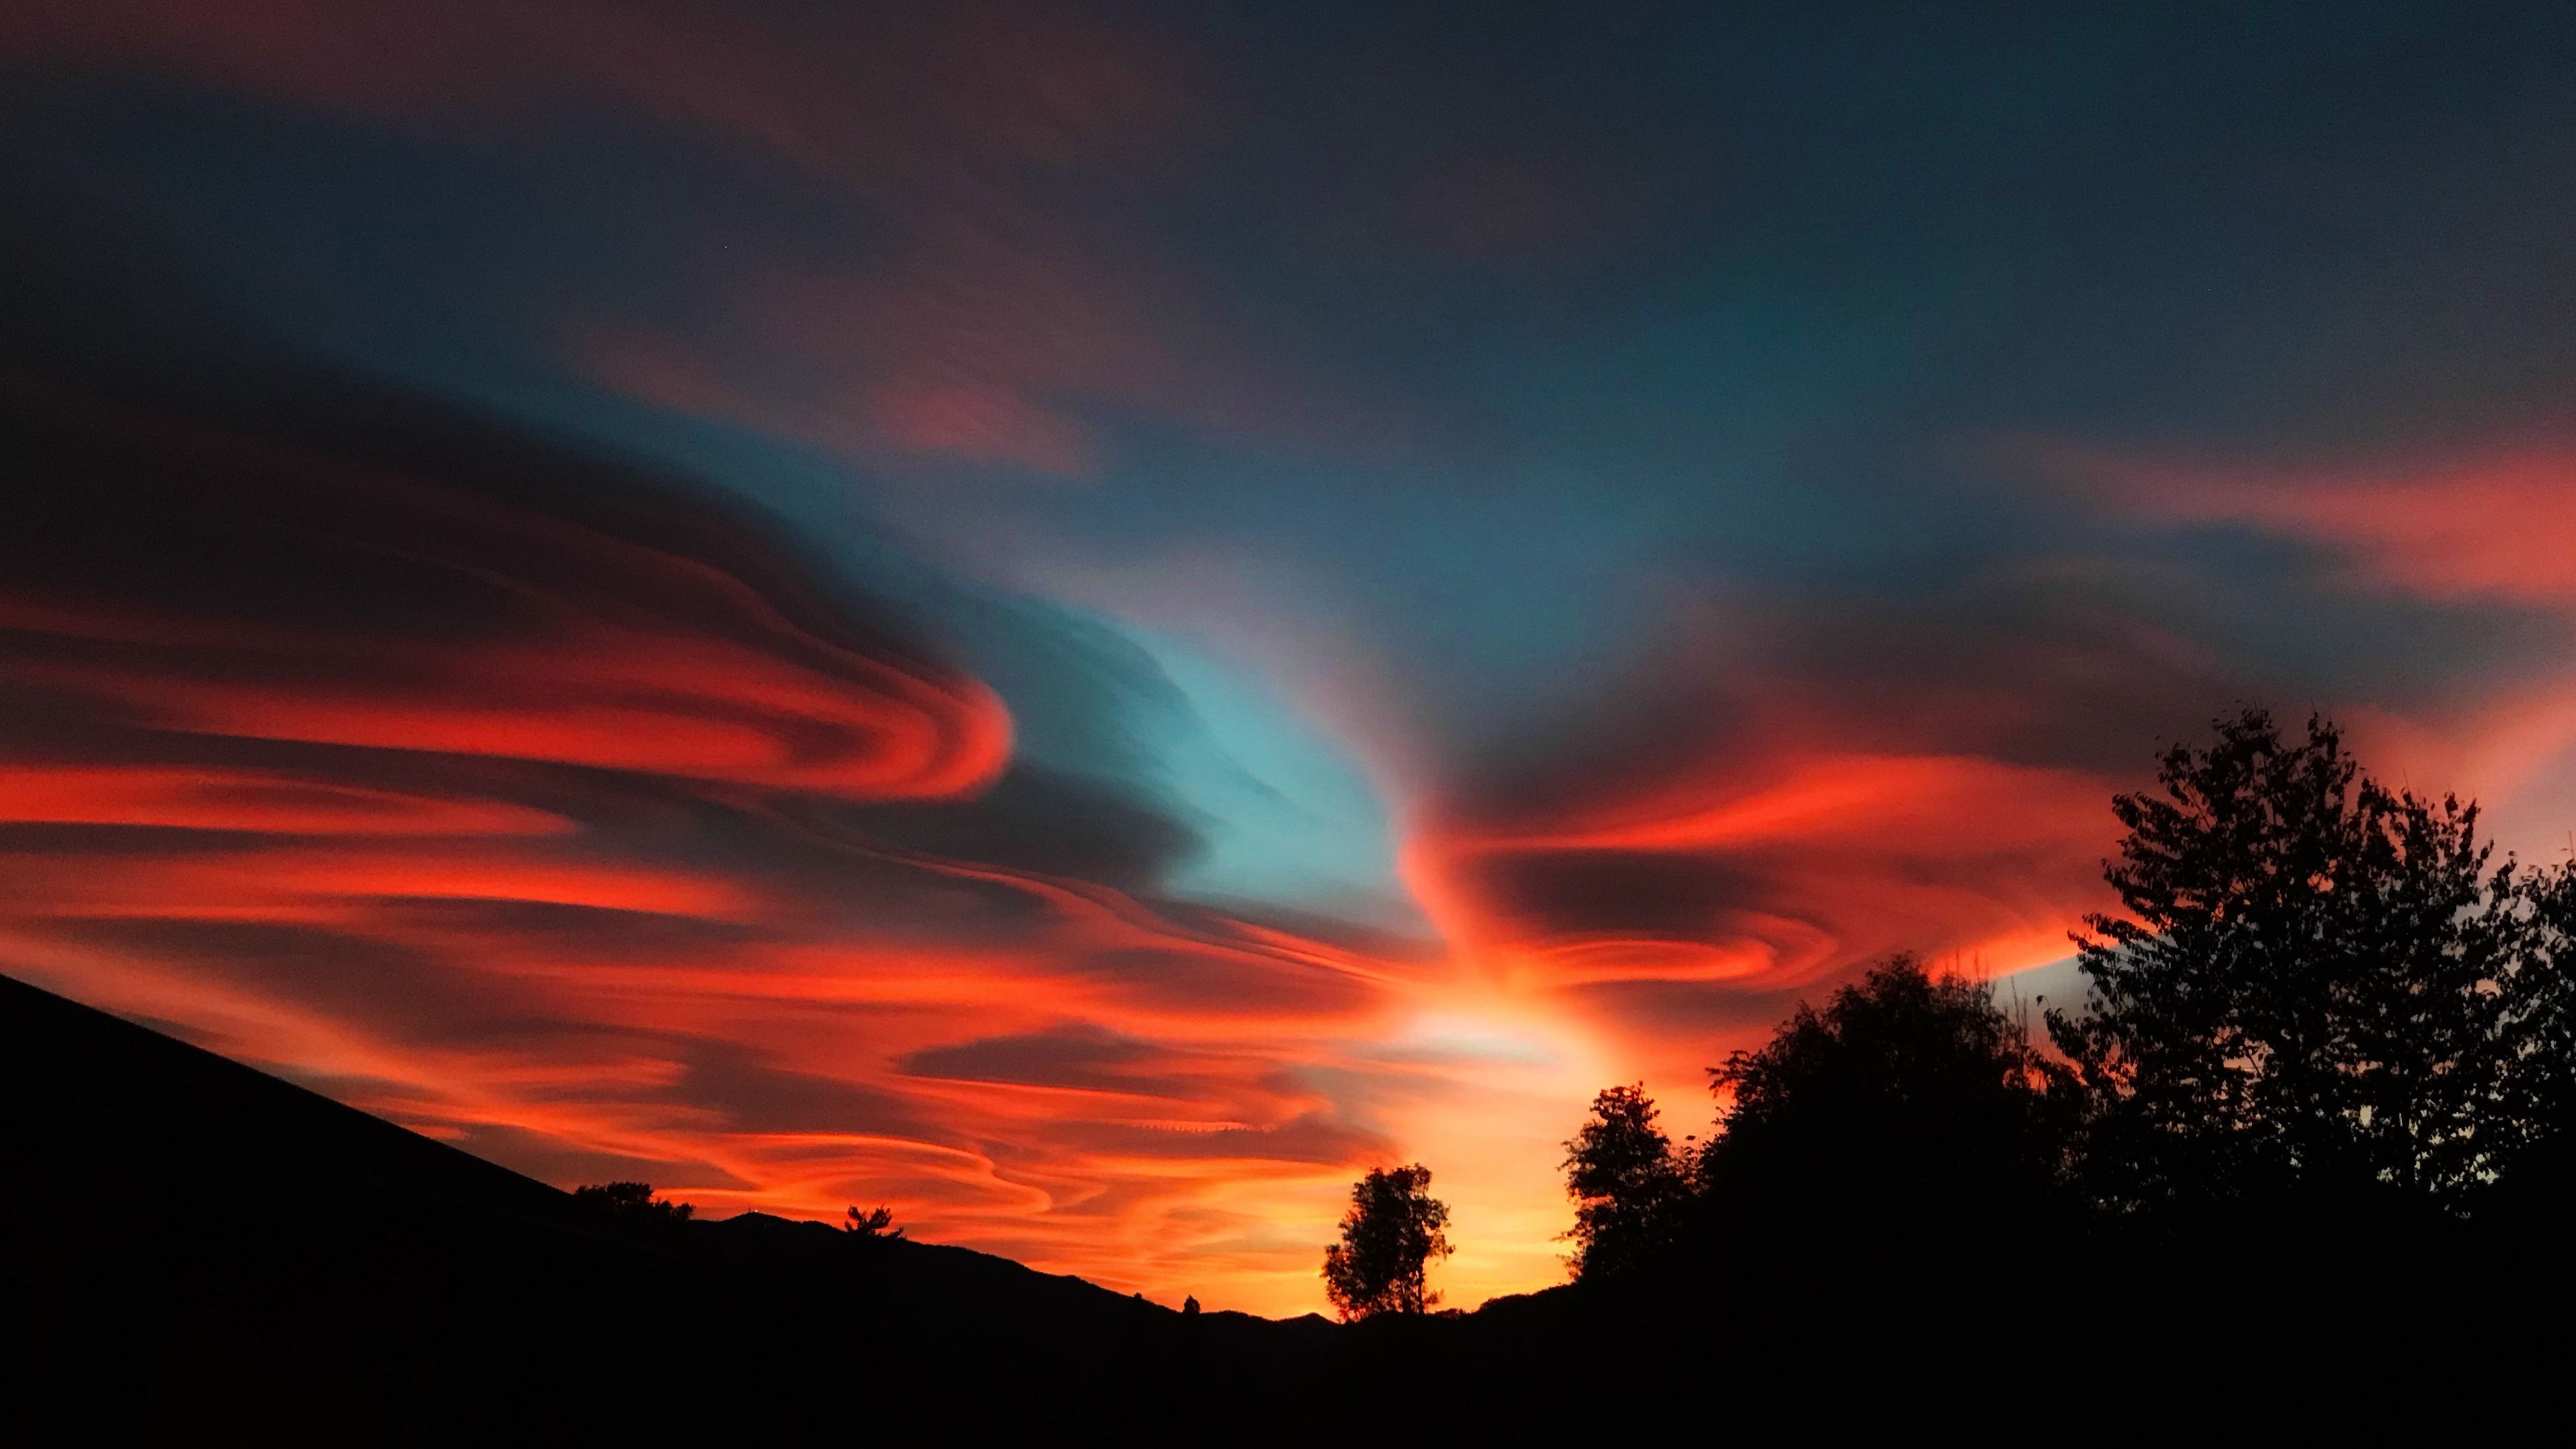 Download Sunset, orange clouds, sky wallpaper, 3840x 4K UHD 16: Widescreen